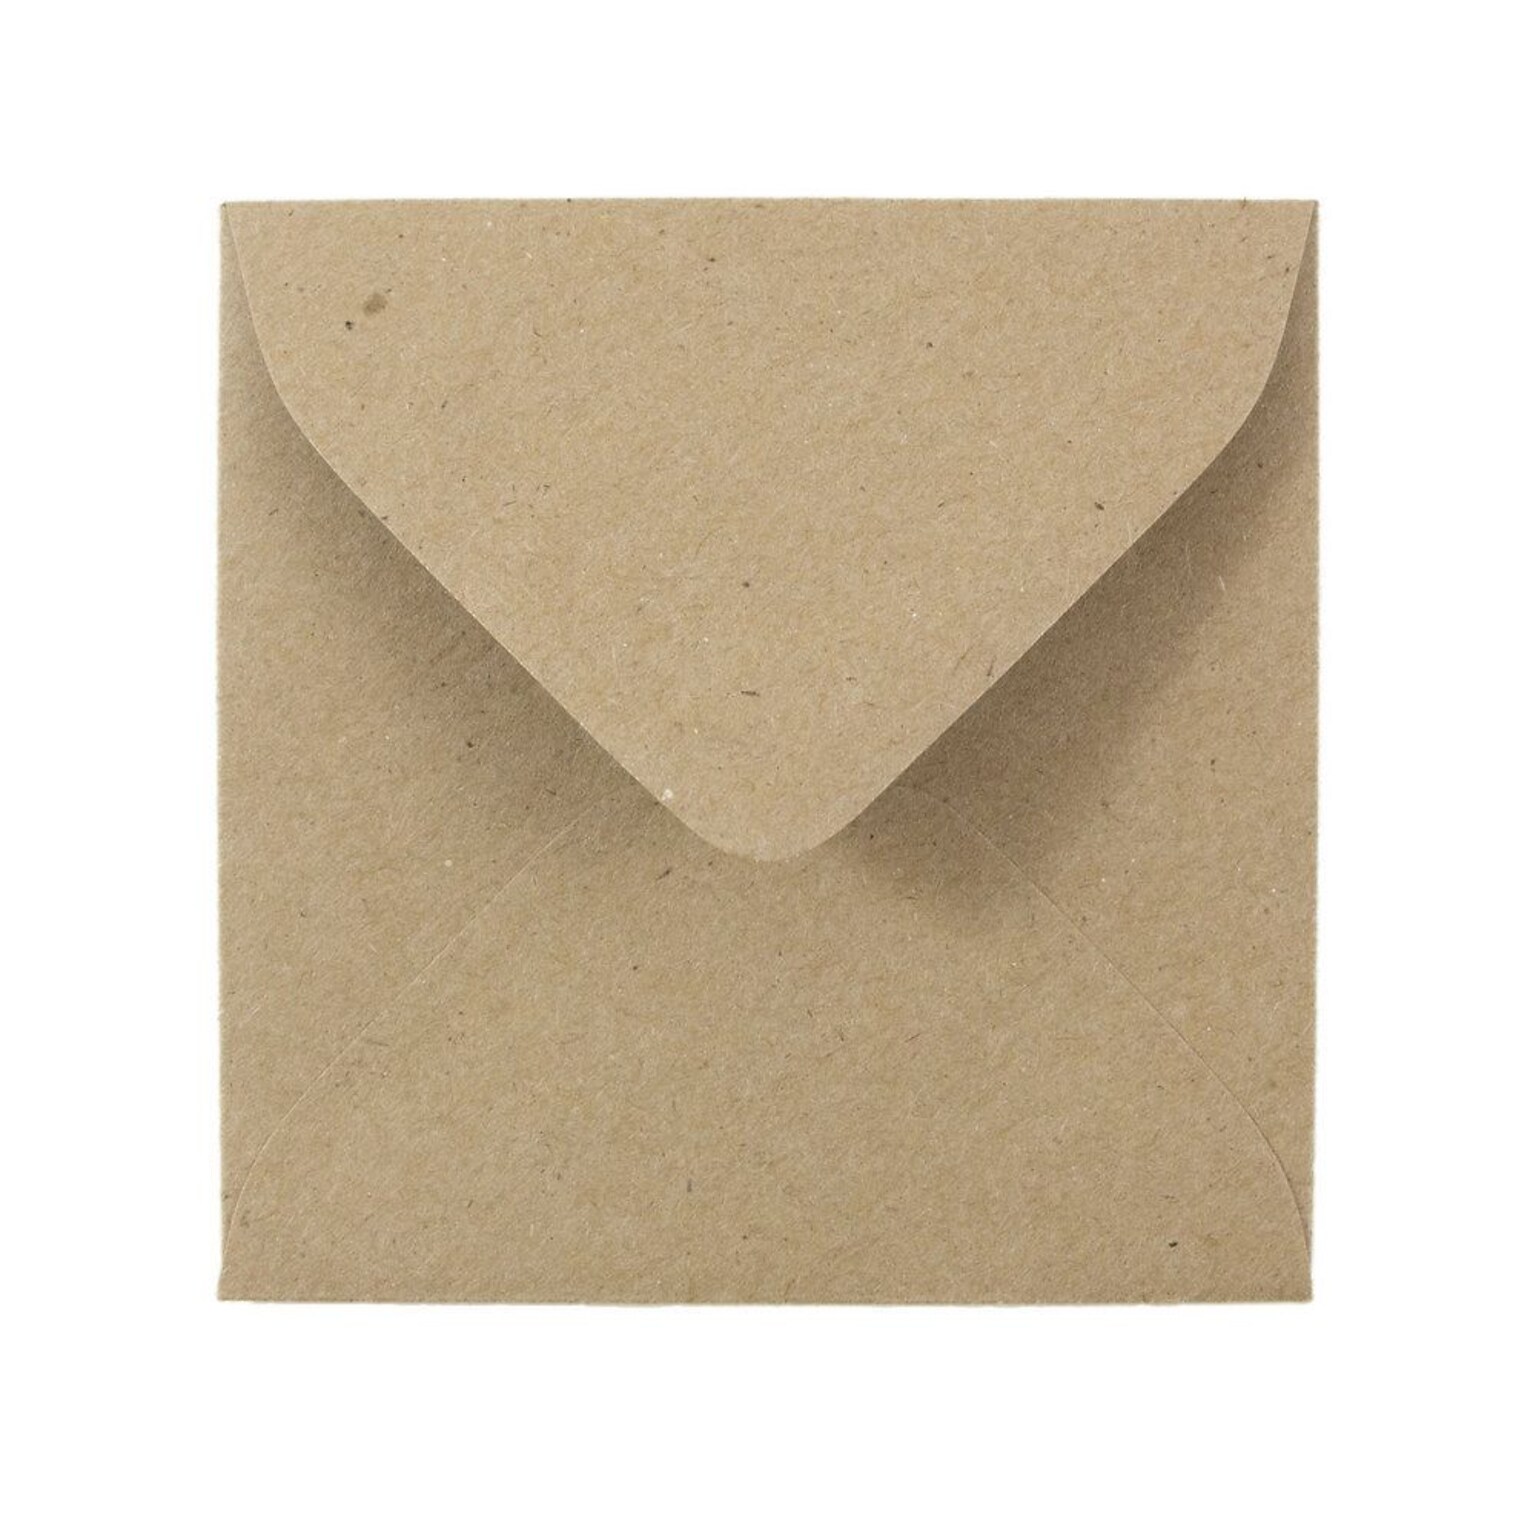 JAM Paper 3.125 x 3.125 Square Recycled Invitation Envelopes, Brown Kraft Paper Bag, 50/Pack (52797687i)